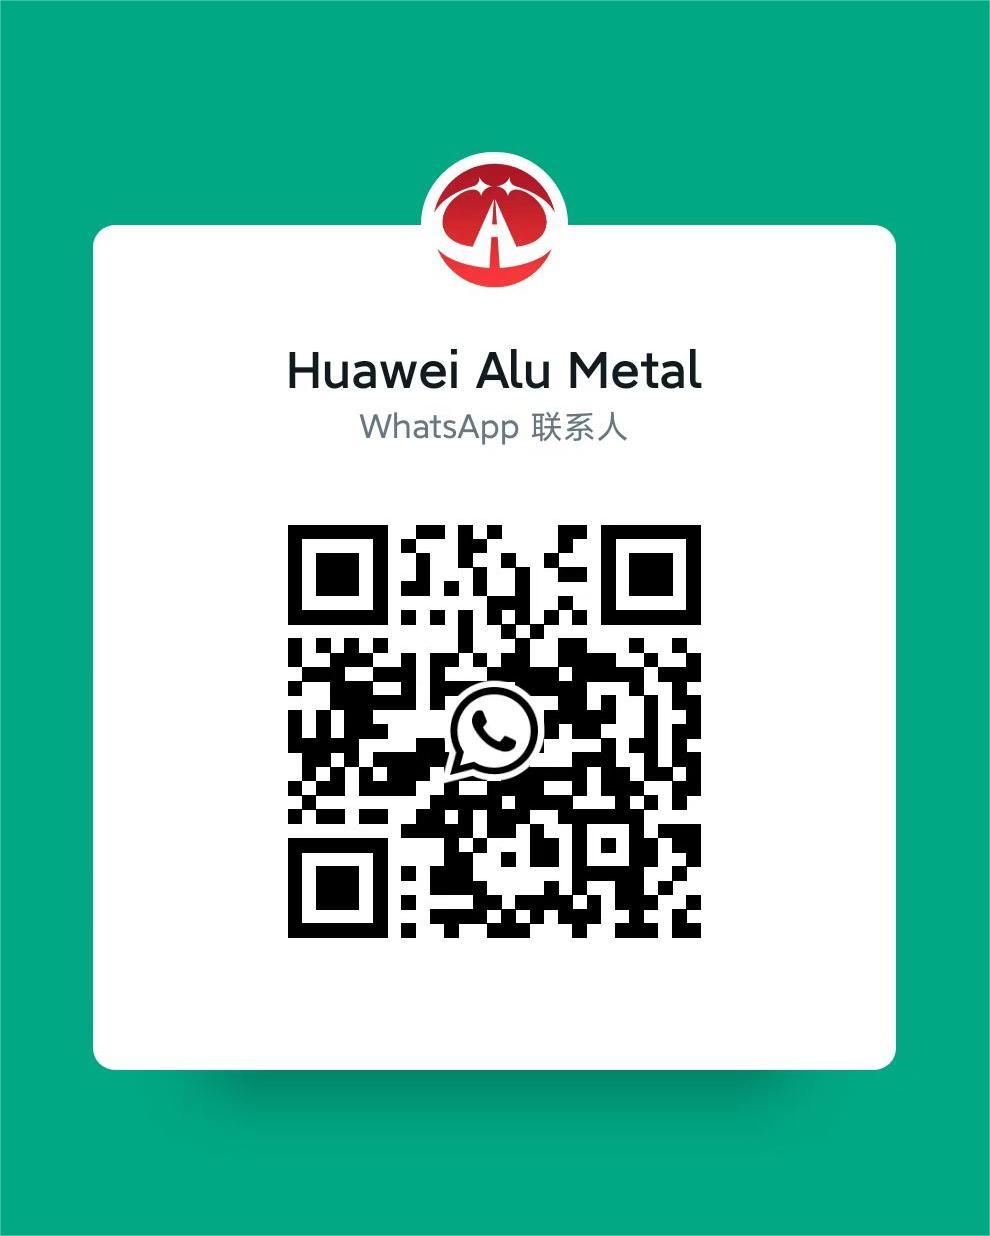 Huawei алюминиевые металлы